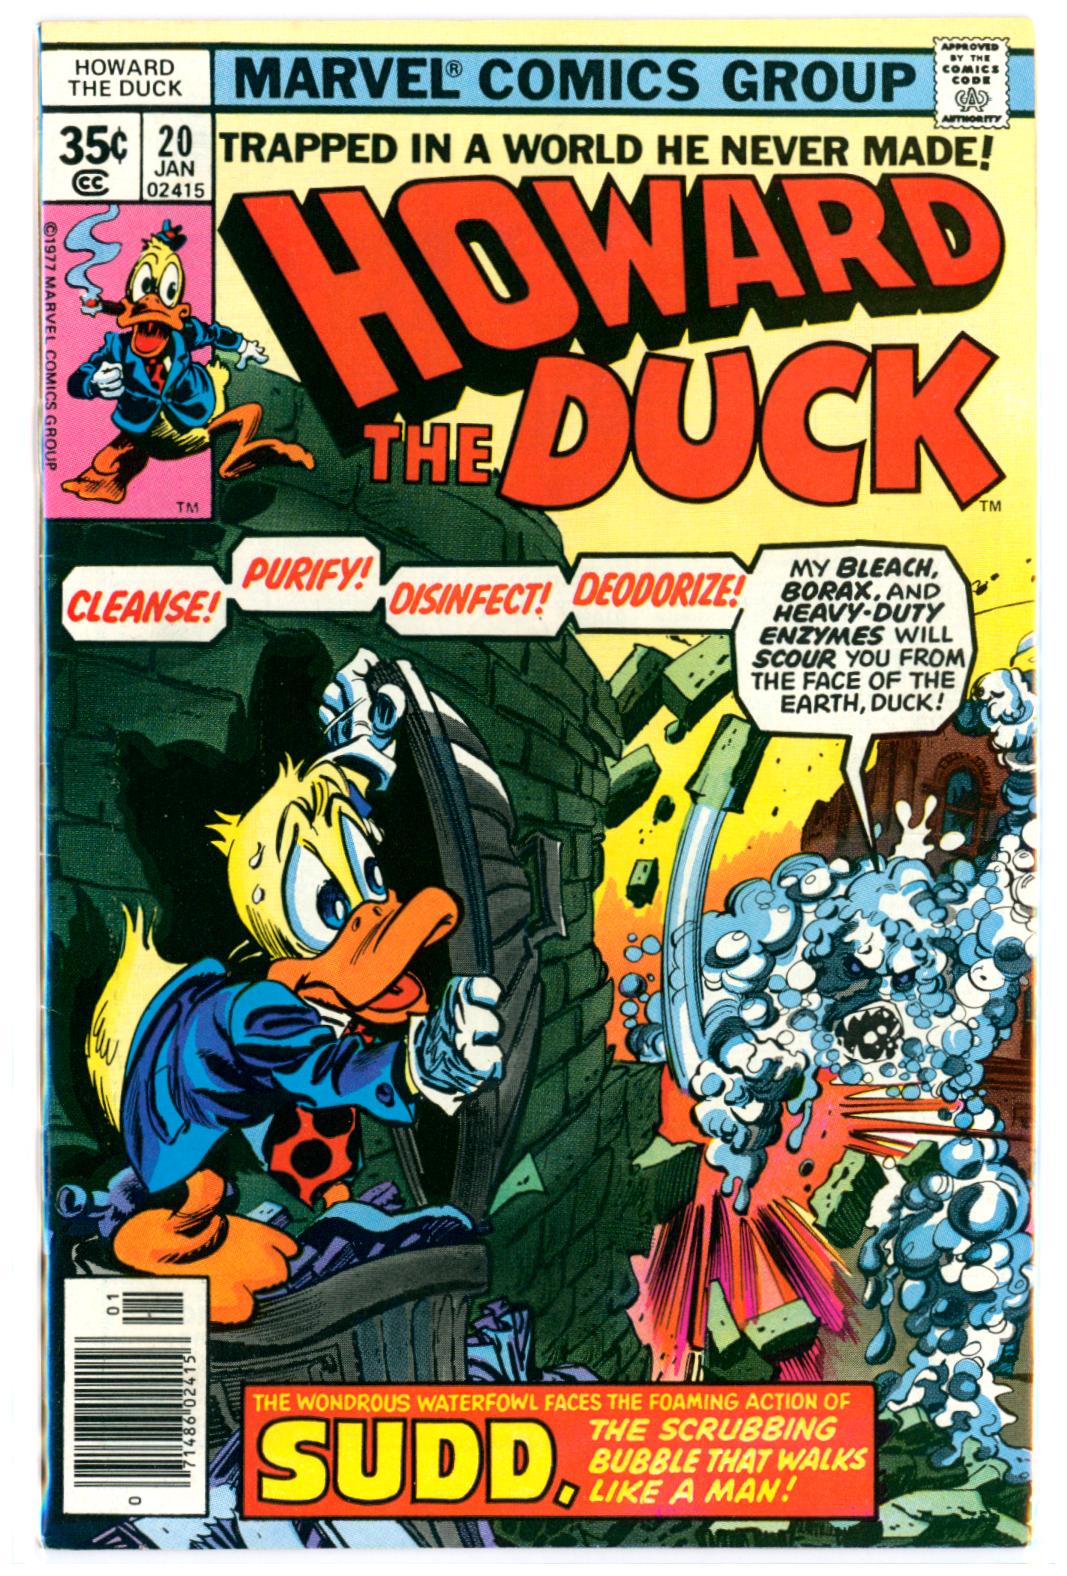 Howard the Duck #20